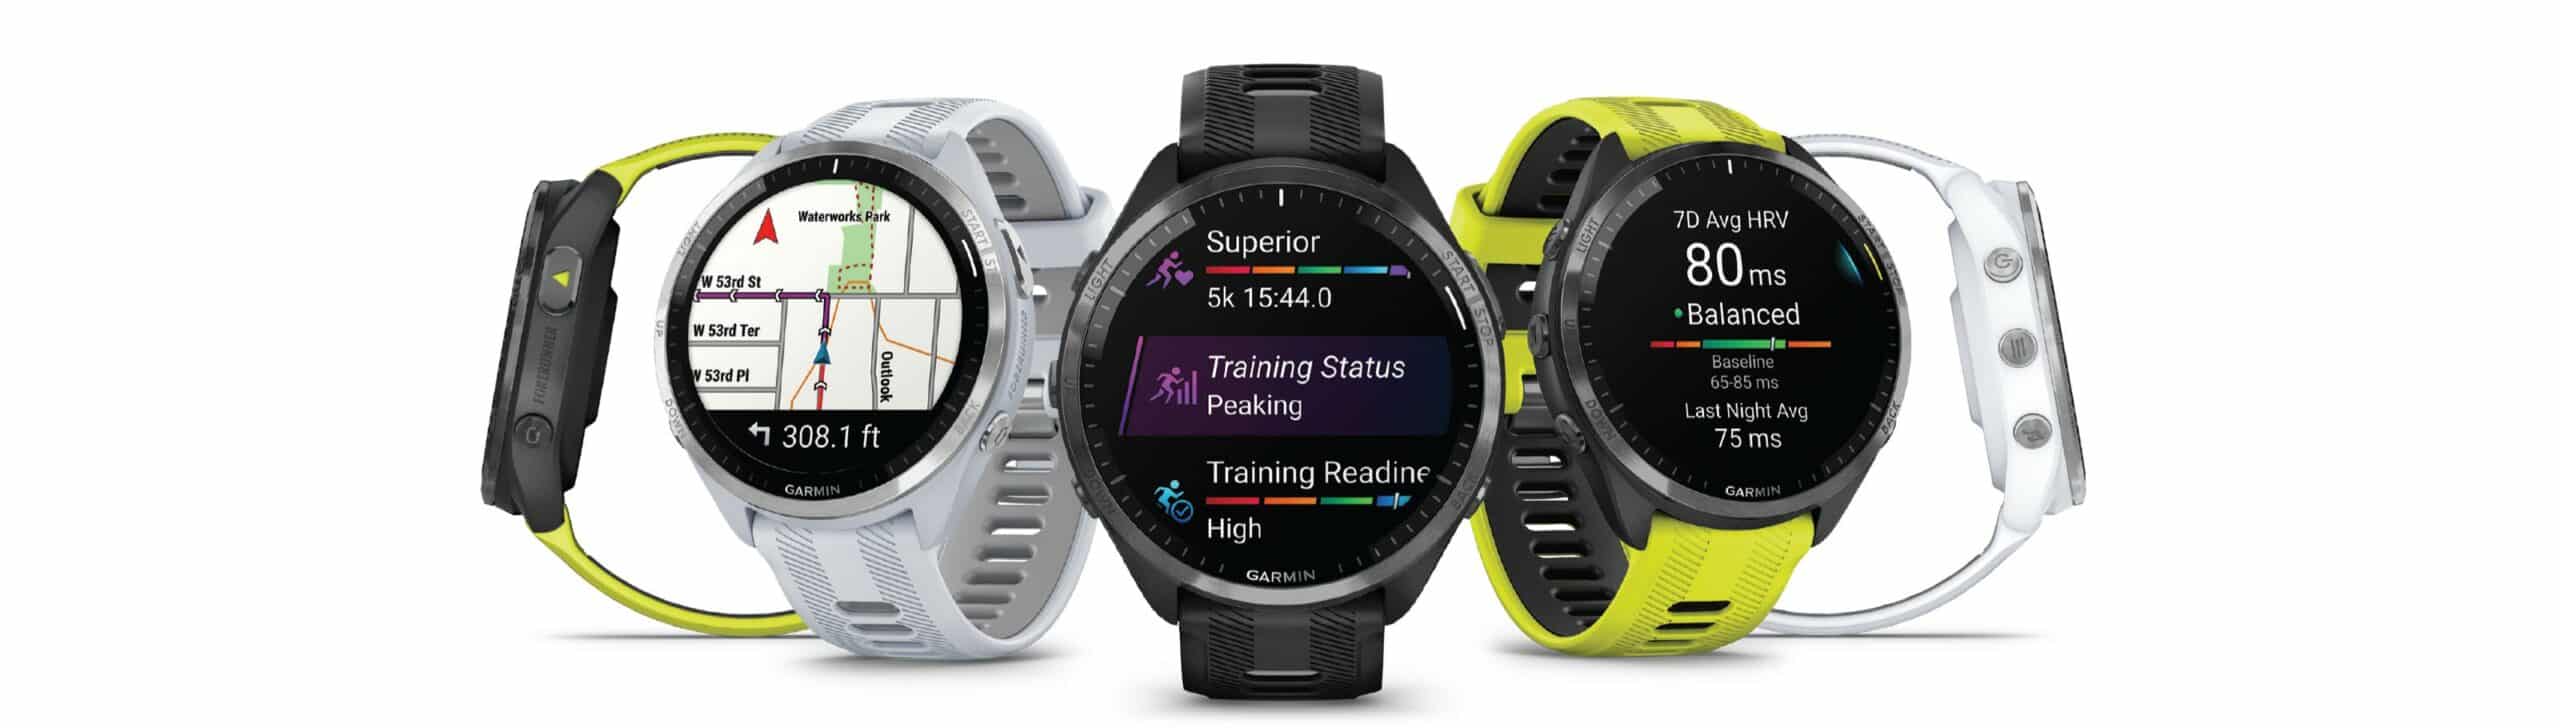 Garmin 965 AMOLED display fitness running watch